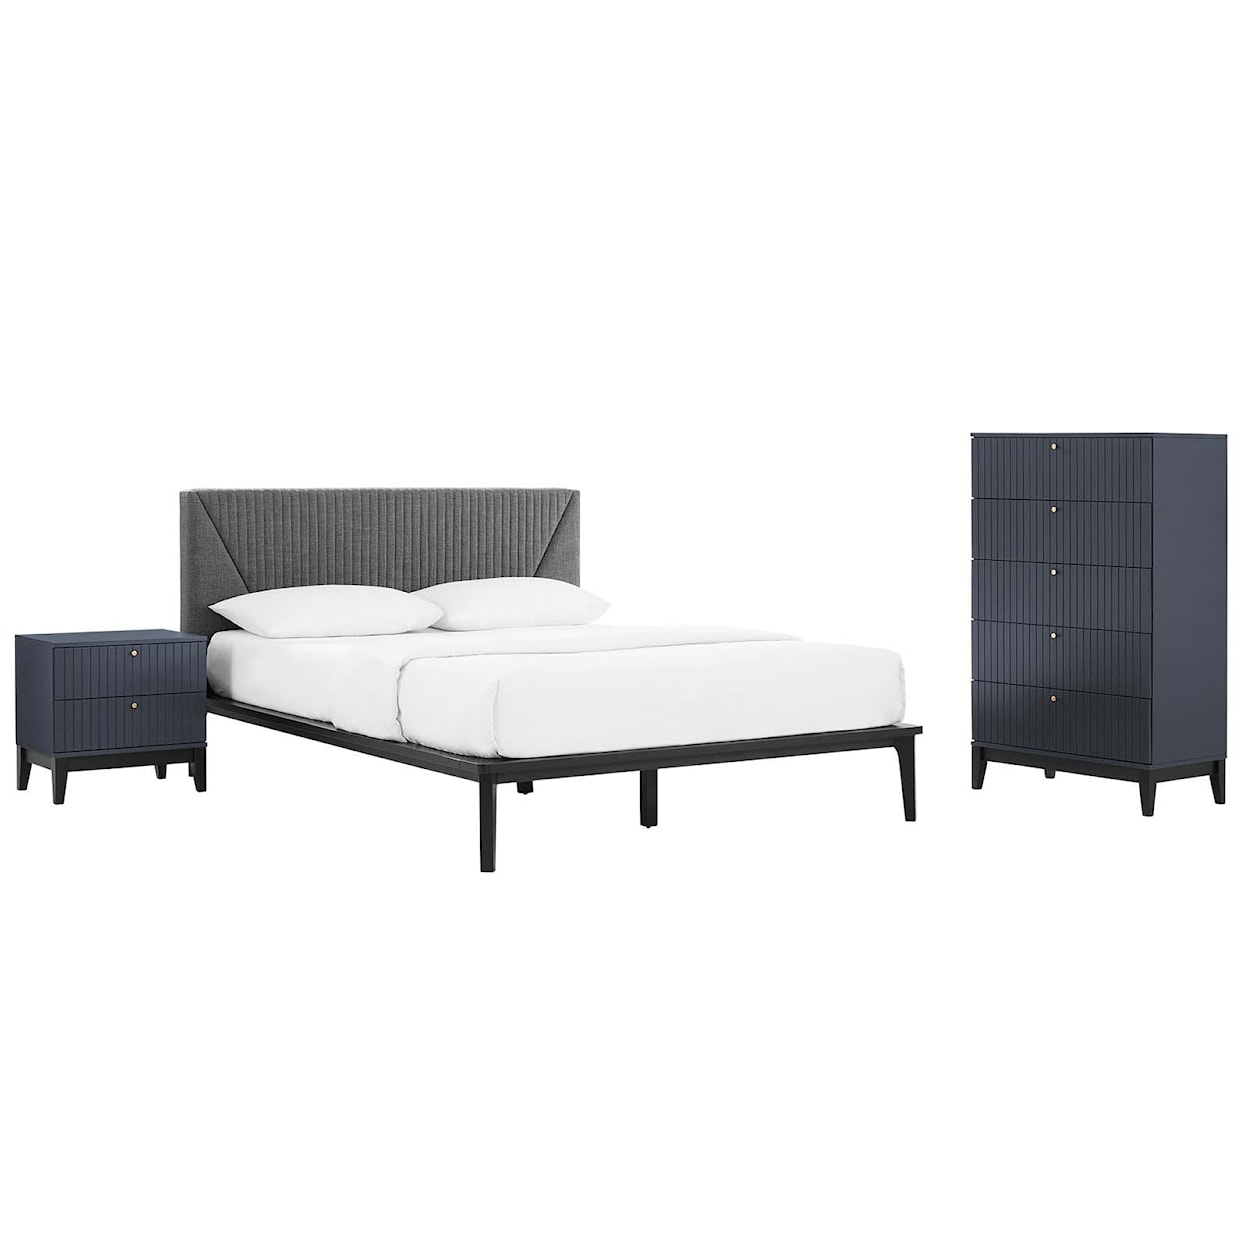 Modway Dakota Dakota 3 Piece Upholstered Bedroom Set